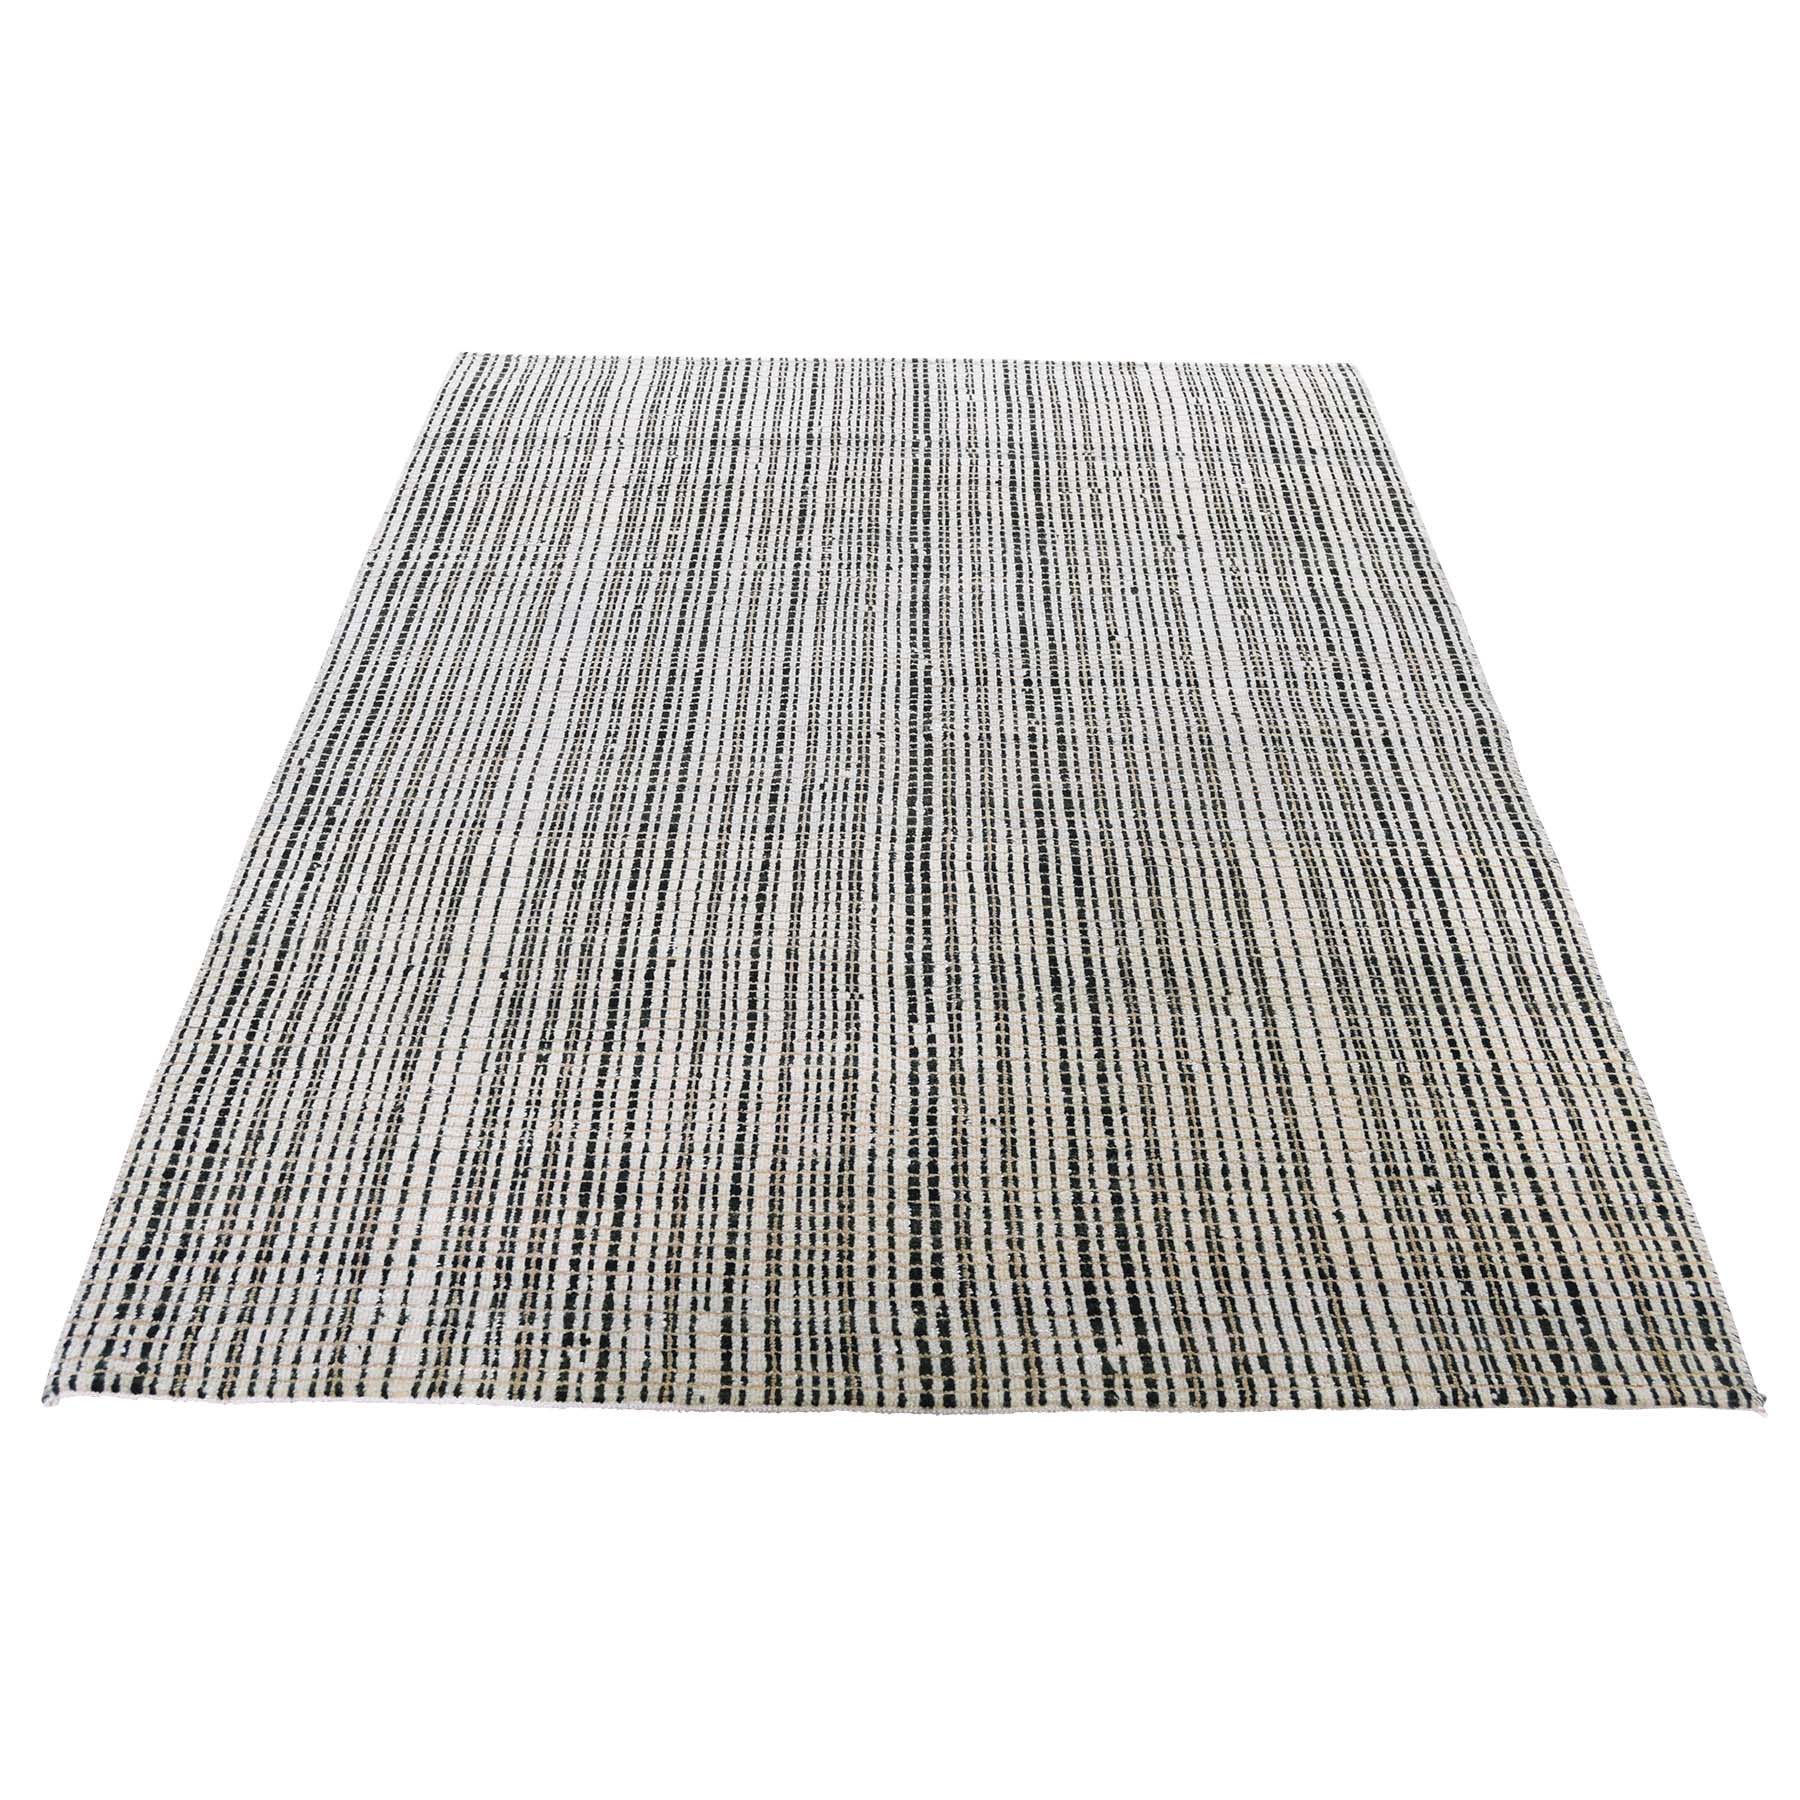 4'x5'10" Modern Tone on Tone Striped Pure Wool Hand Woven Oriental Rug 